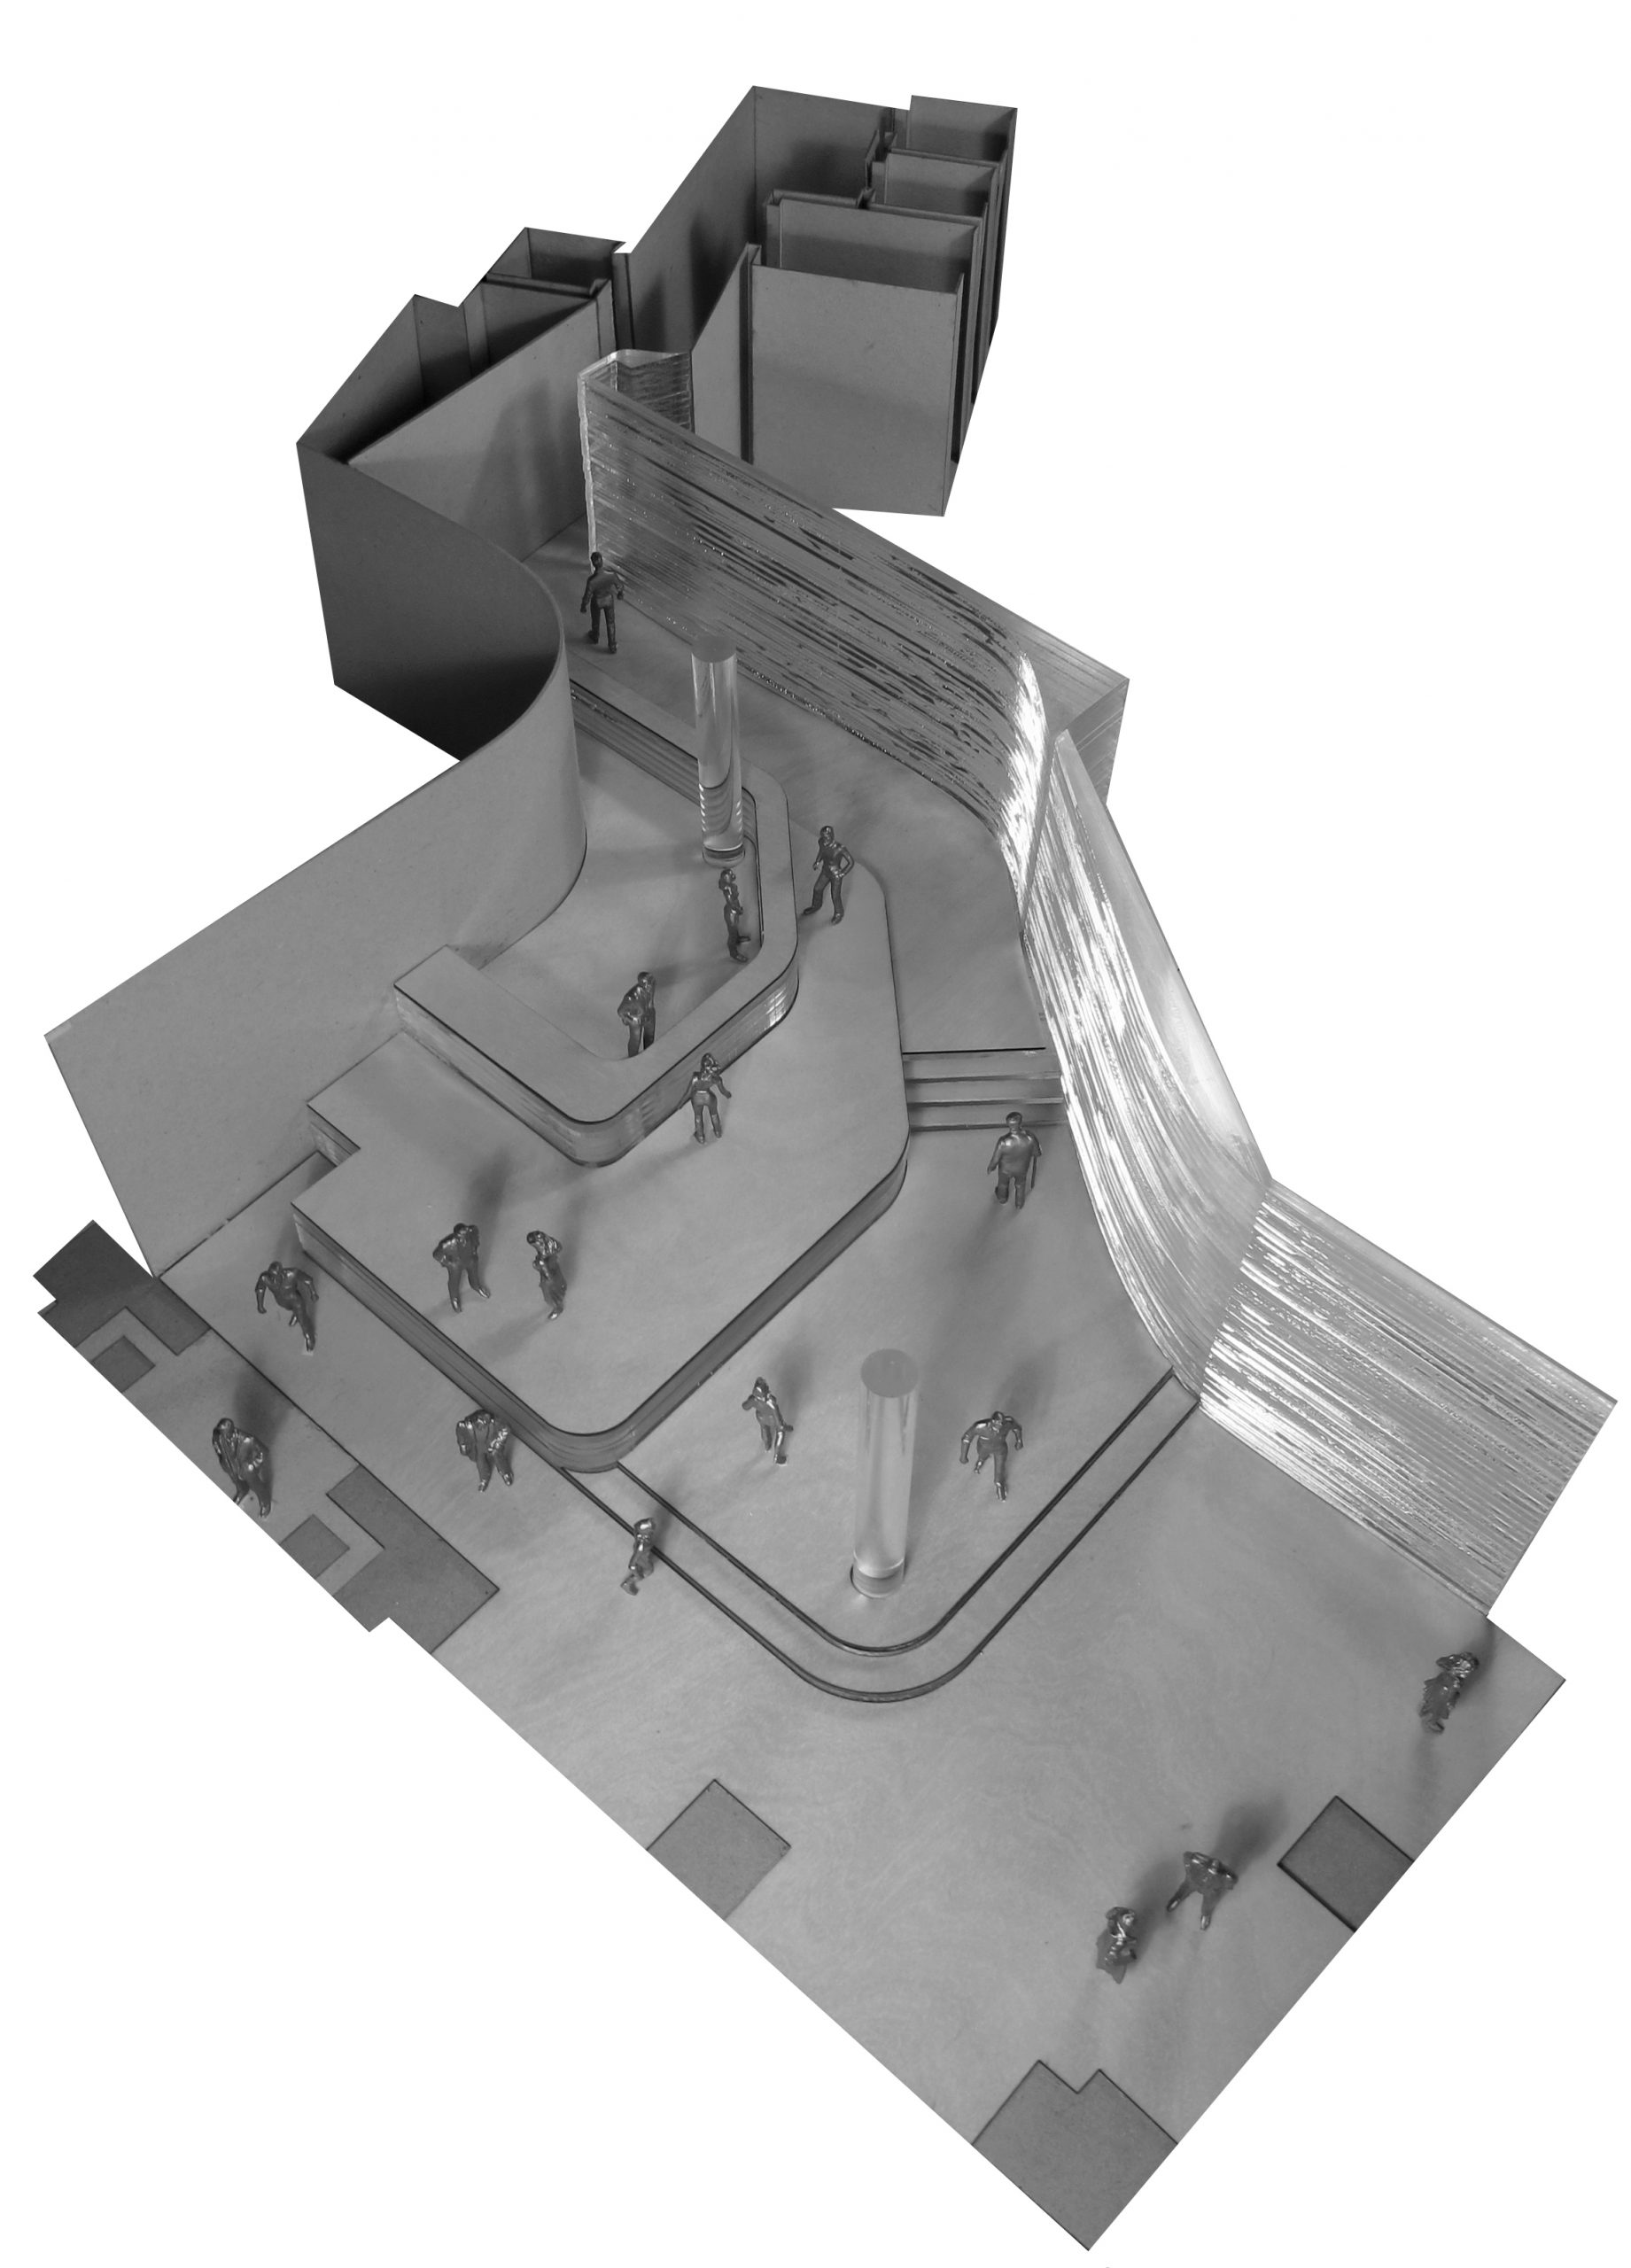 Marconi House design model